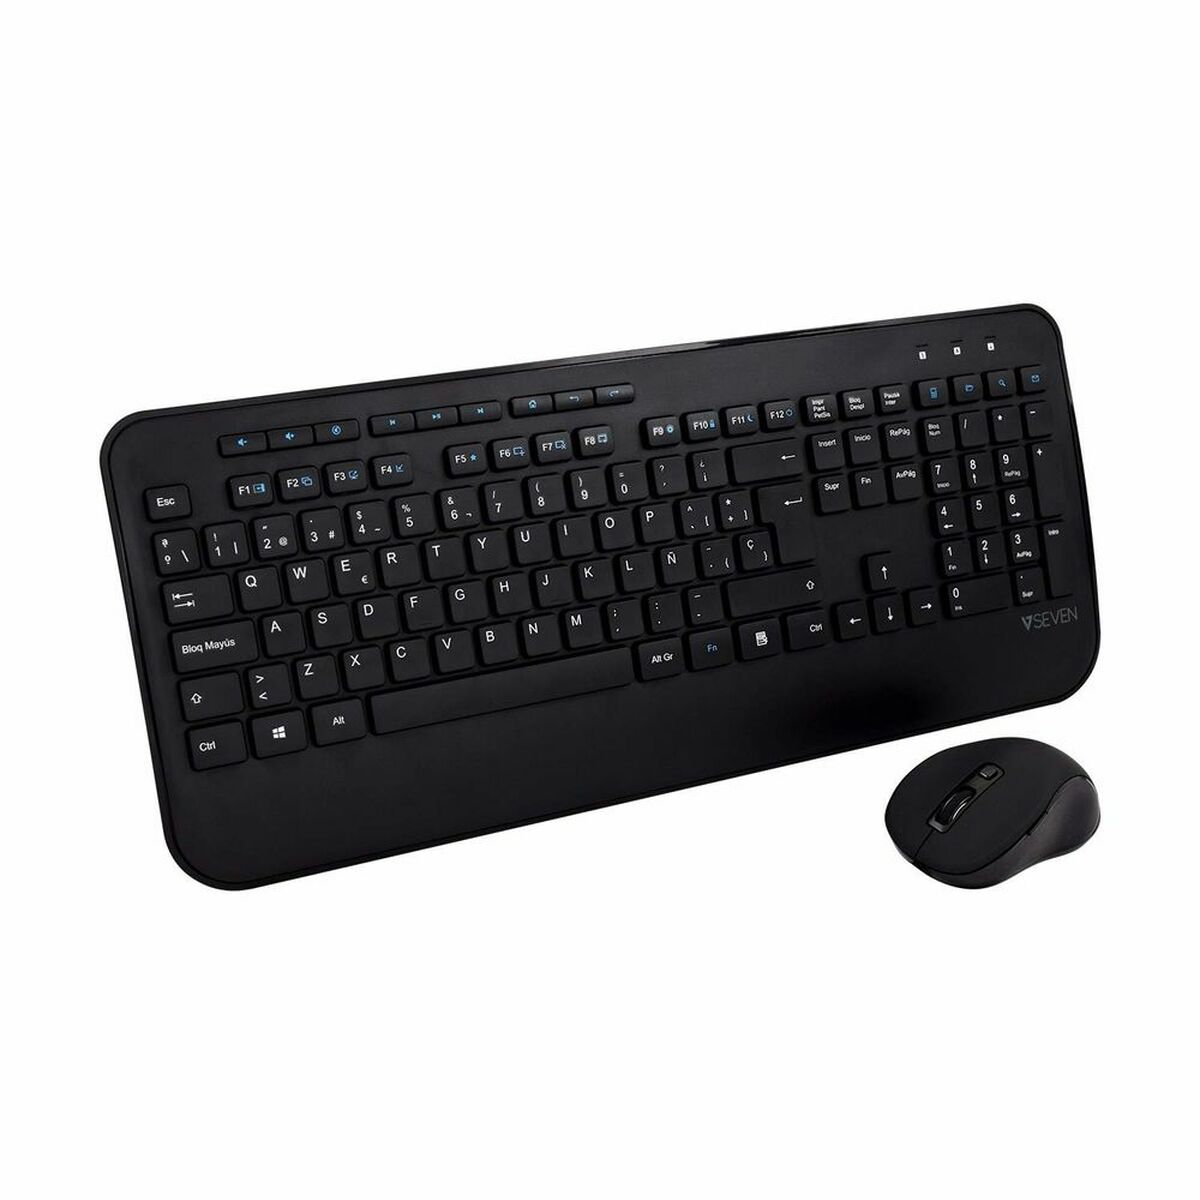 Tastatură și Mouse V7 CKW300ES            